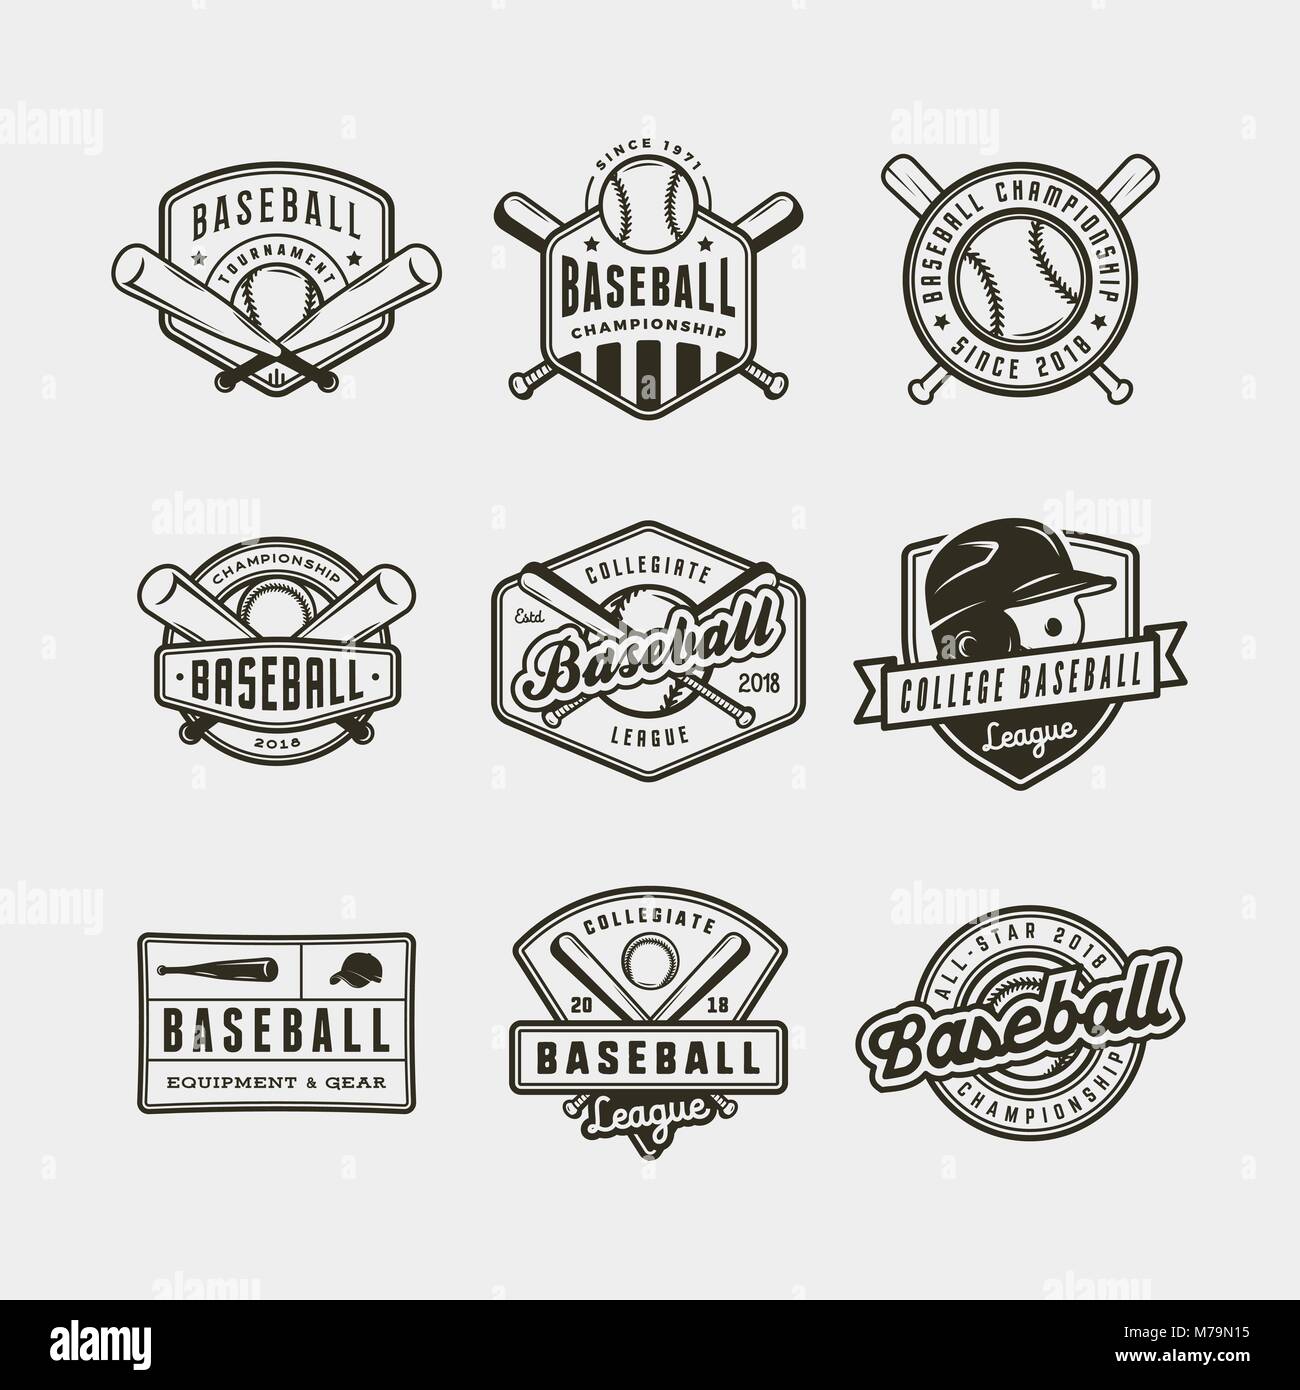 Baseball badge logo design suitable for logos, badge, banner